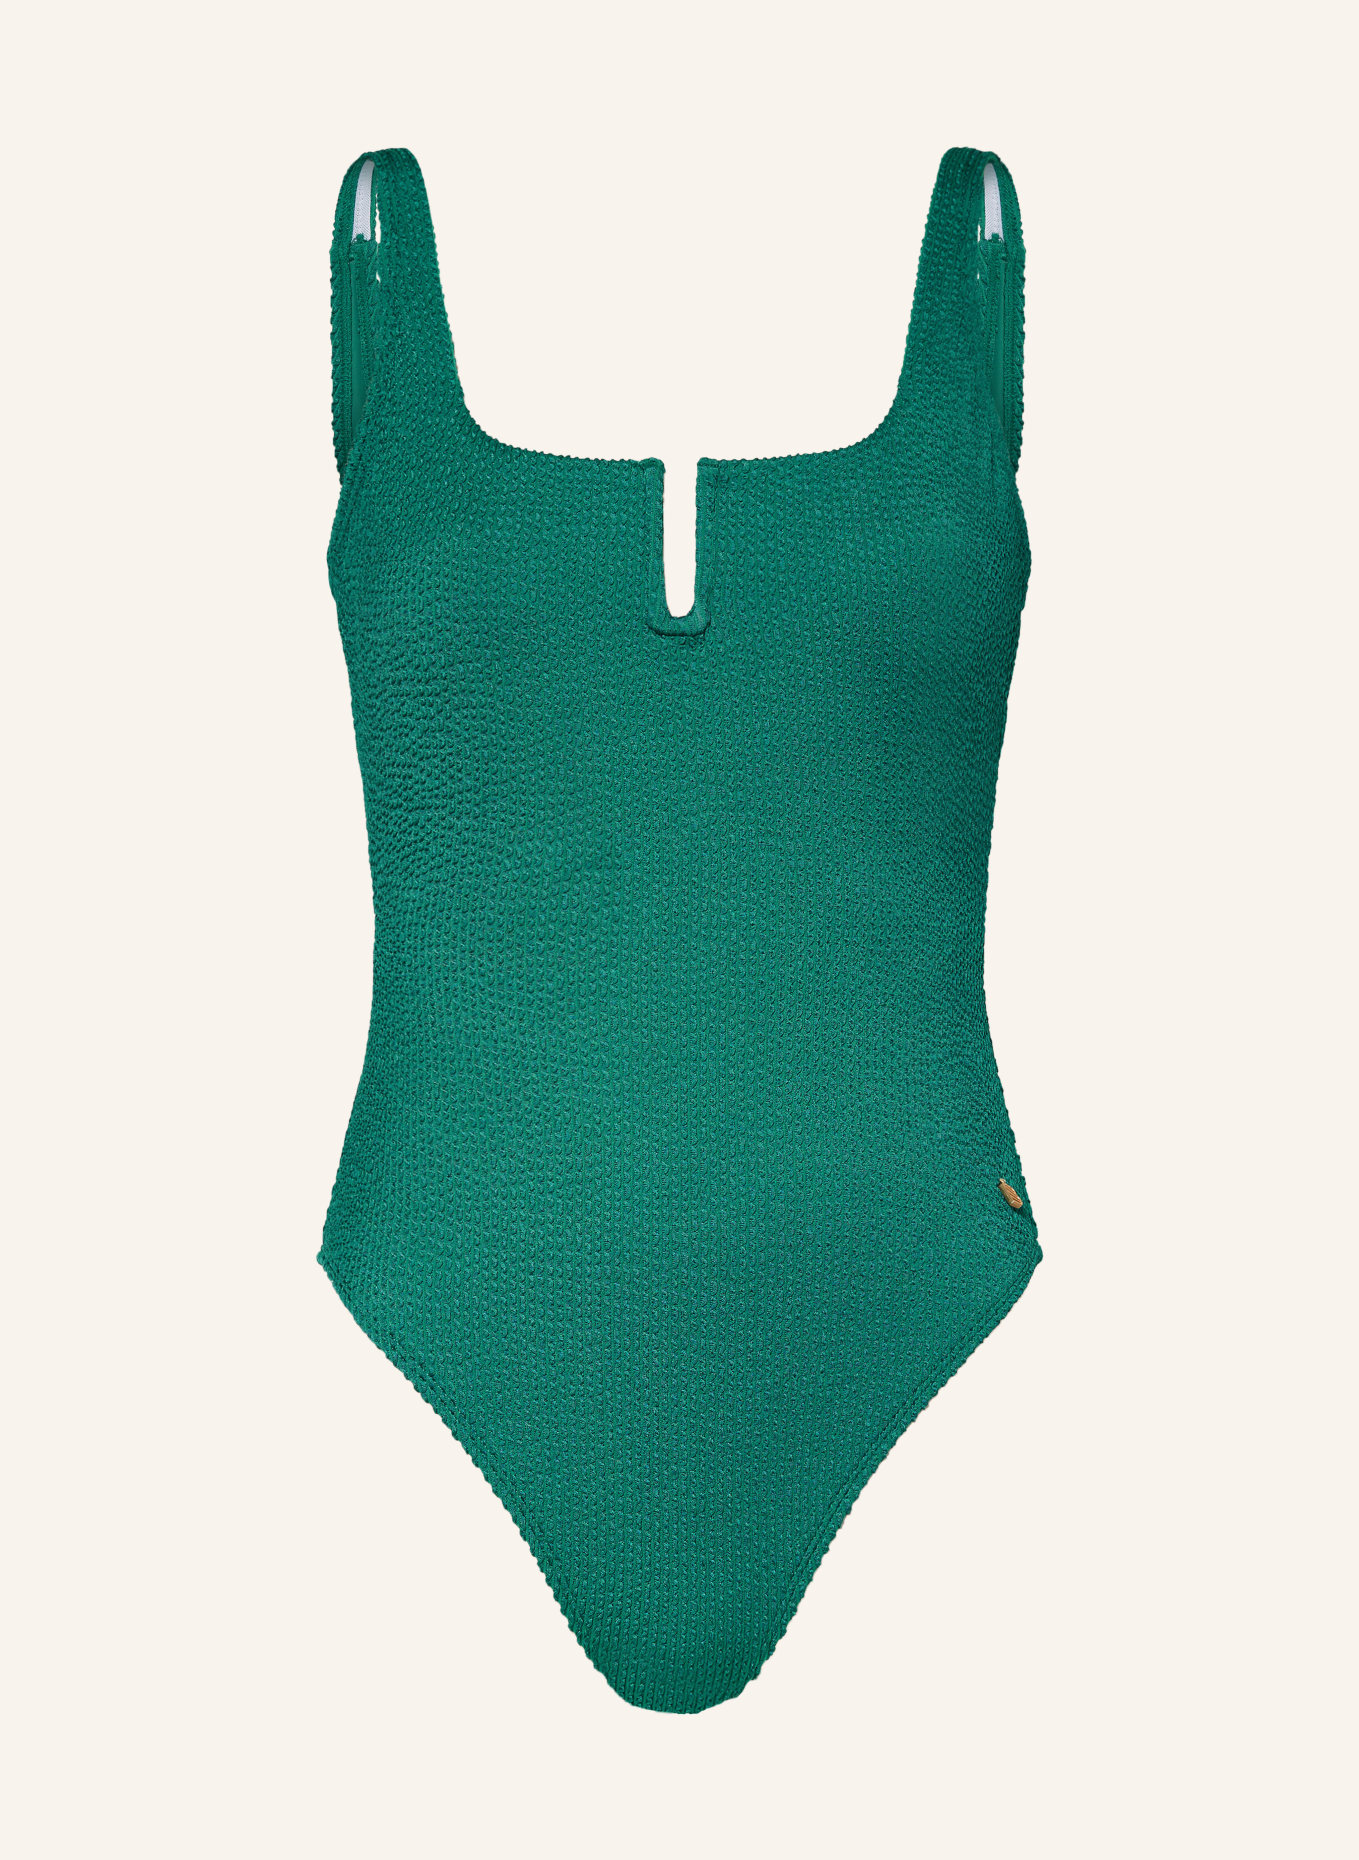 BEACHLIFE Badeanzug FRESH GREEN, Farbe: 725 Fresh Green (Bild 1)